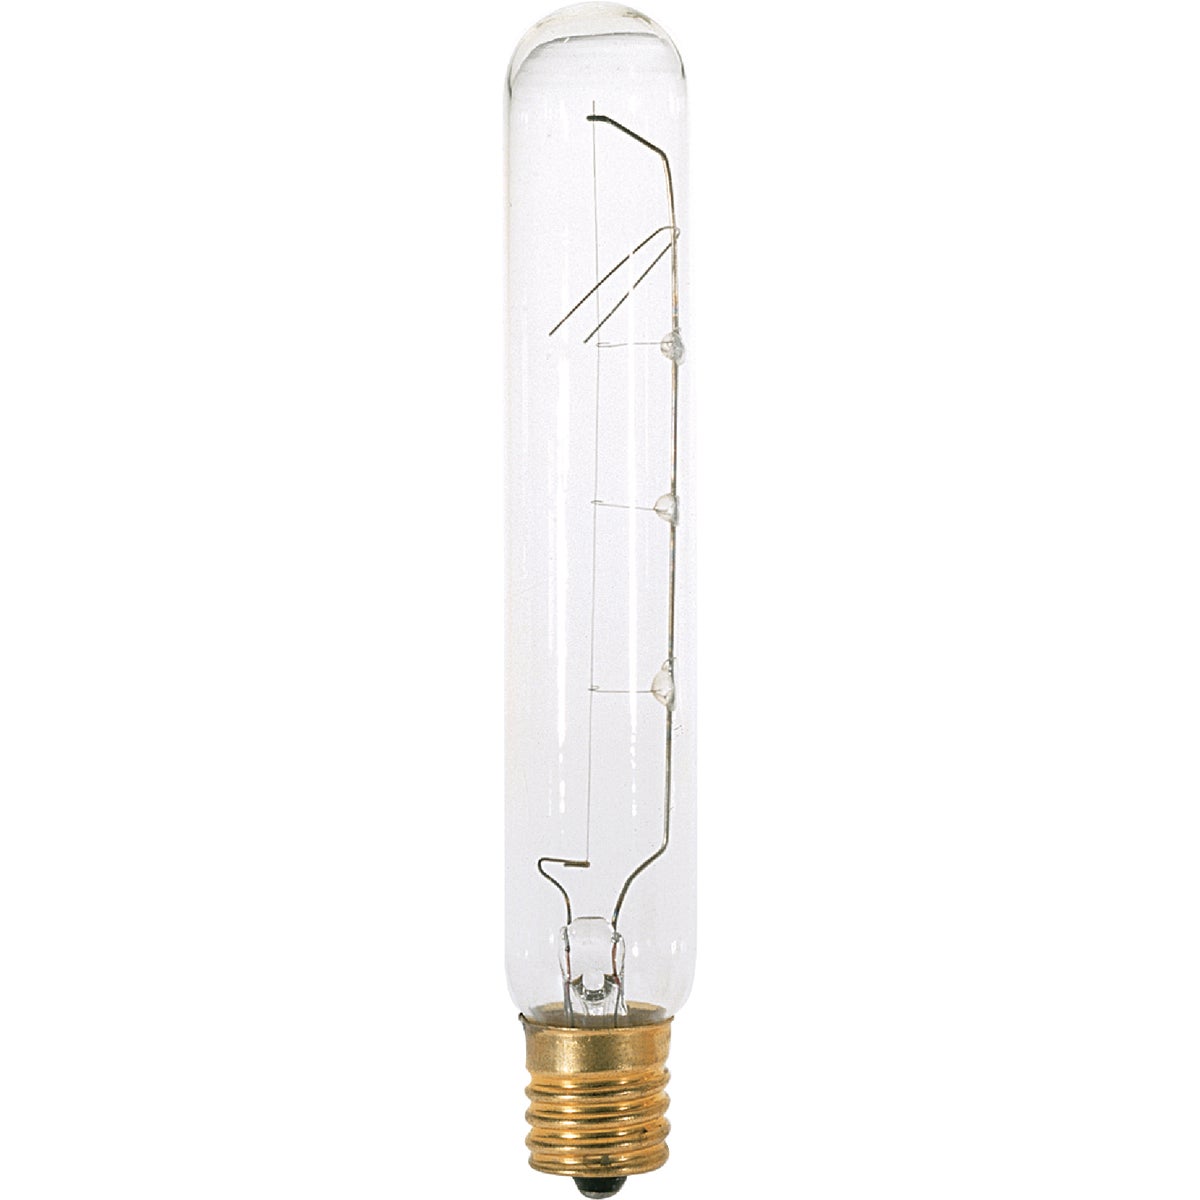 Item 512617, T6.5 tubular incandescent light bulb with intermediate base.